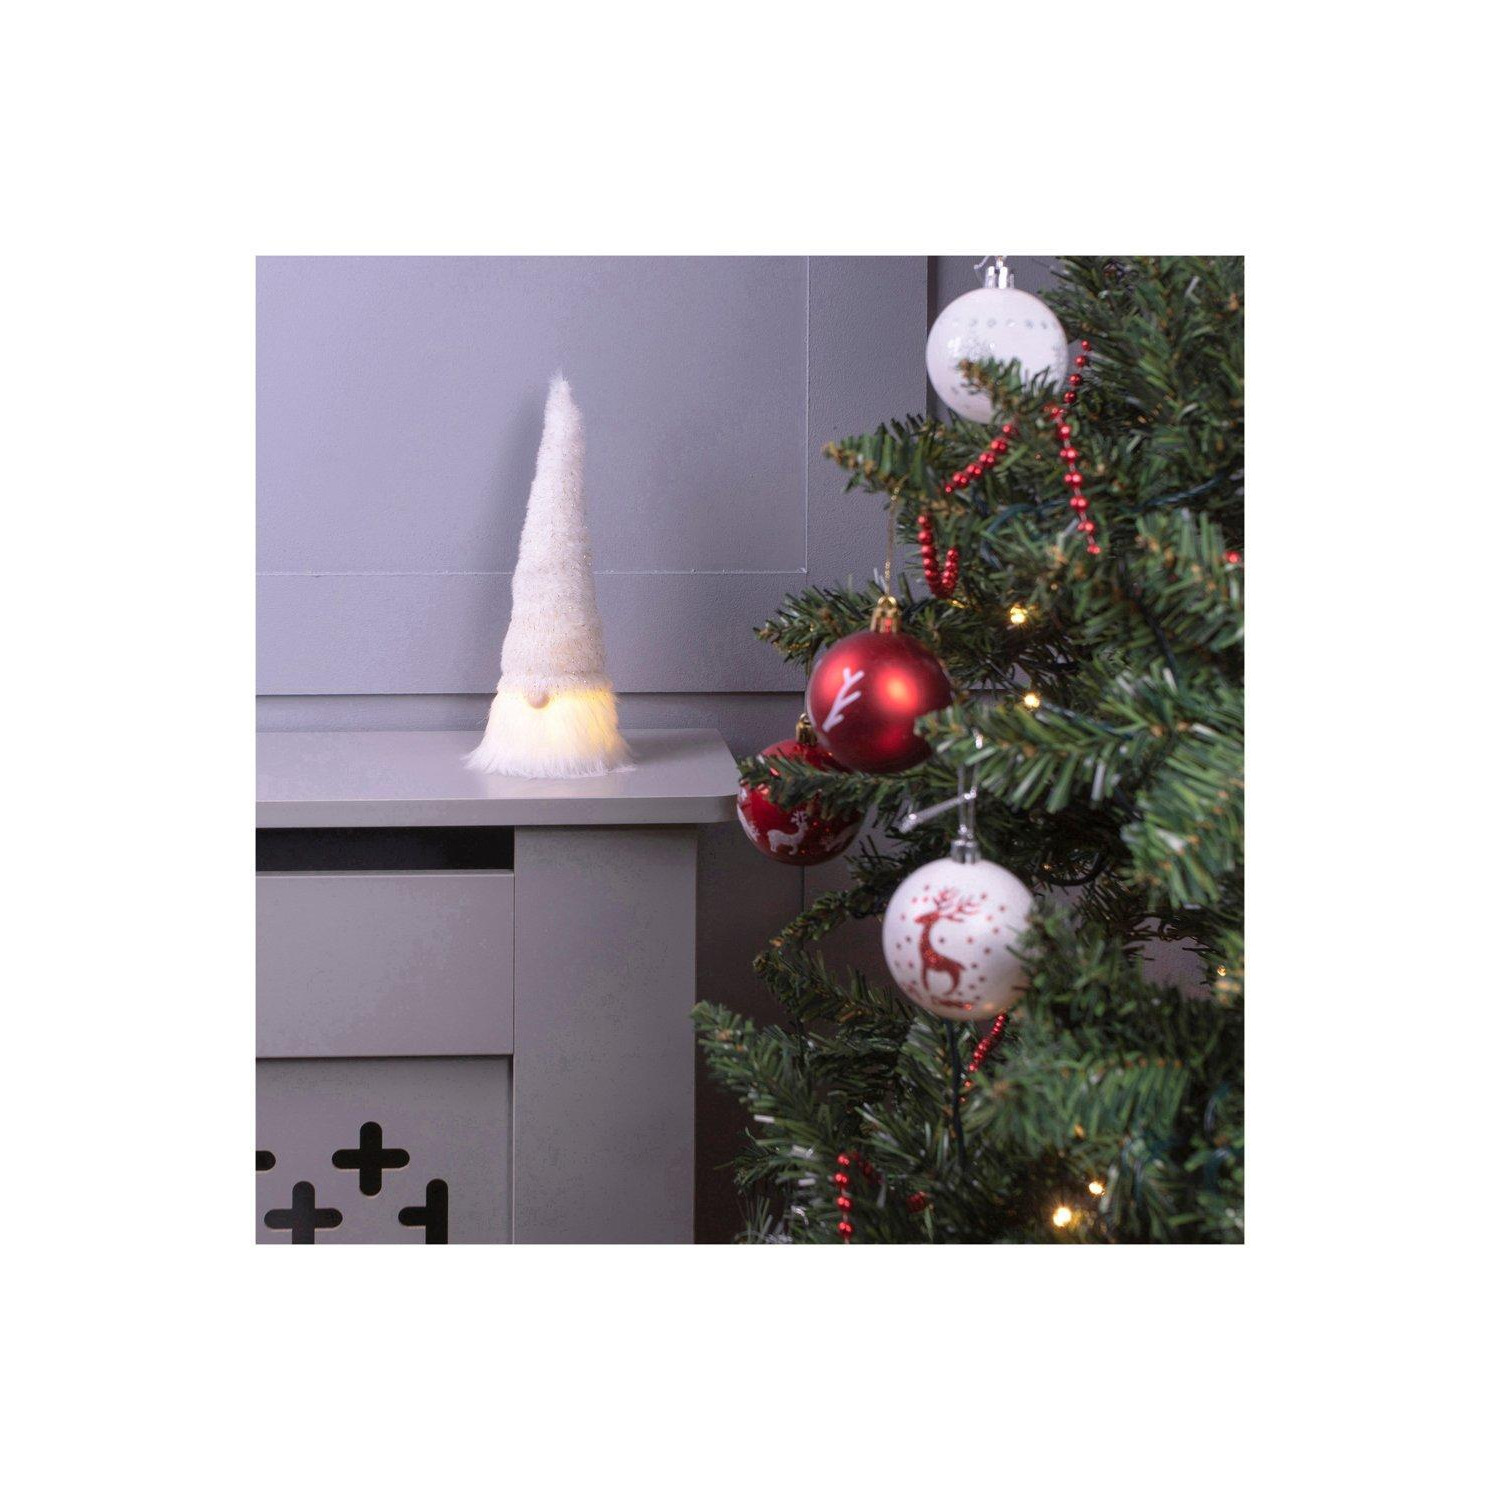 Netagon Home Light Up Christmas Gonk Gnome Ornament Decoration-Anders - image 1